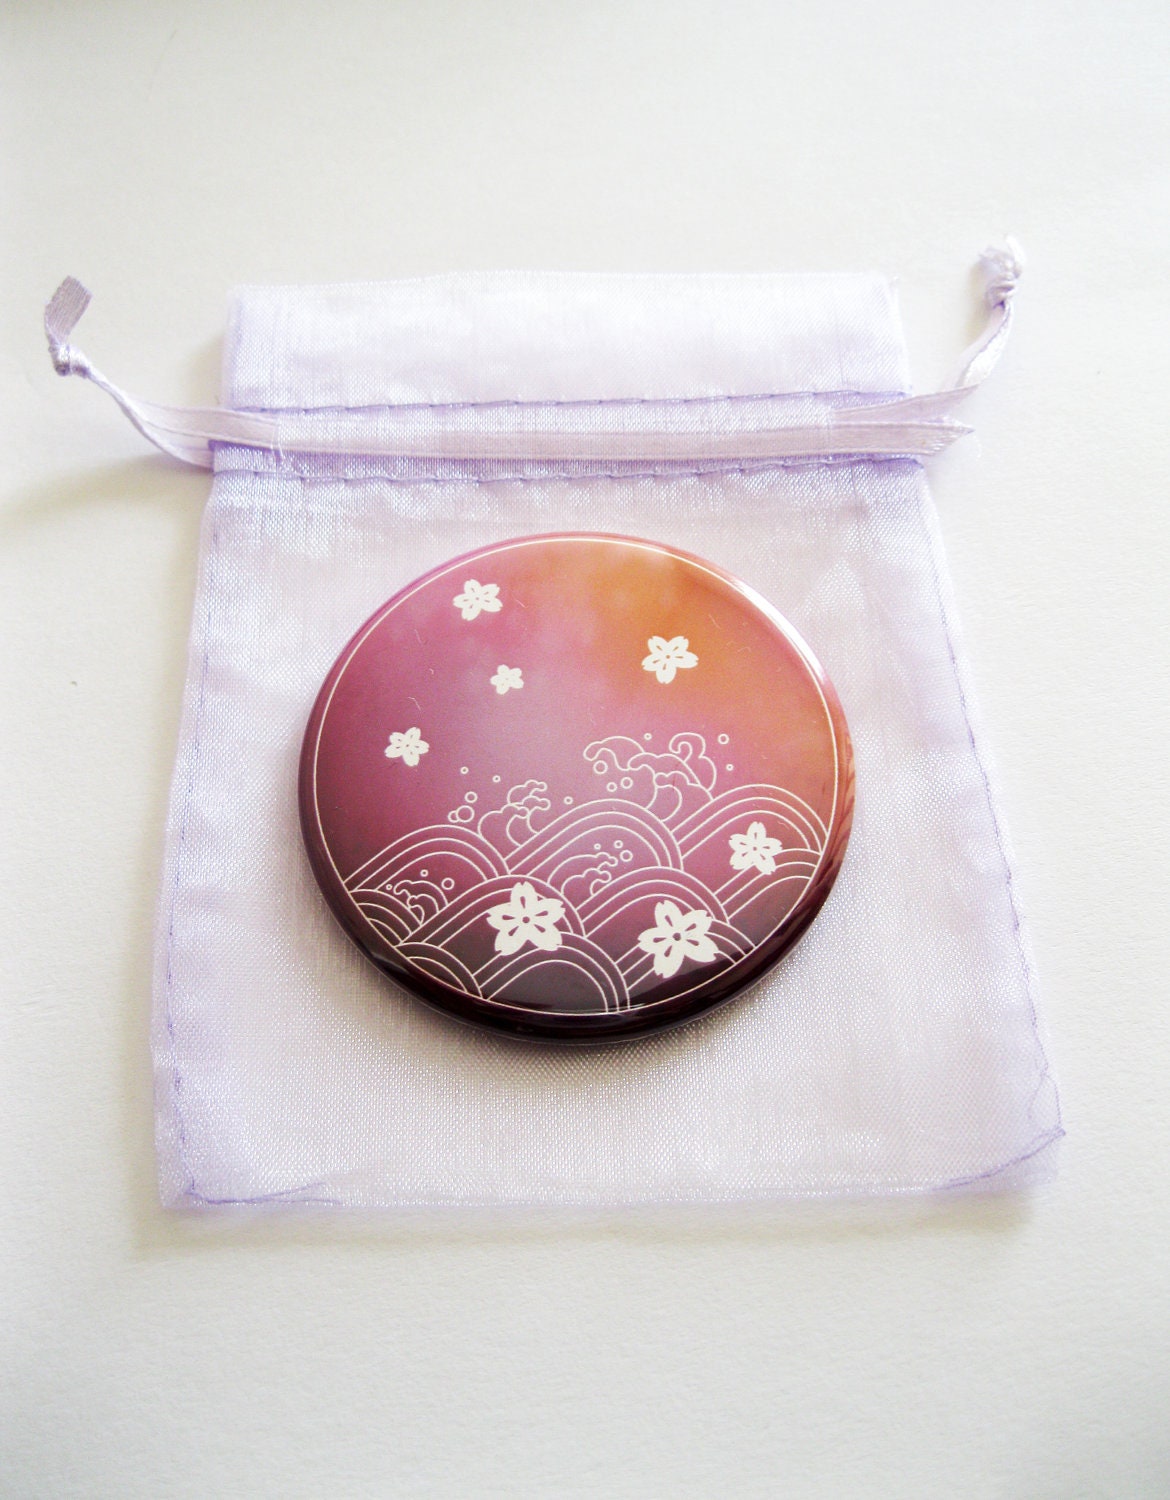 Peach Melba Blossoms and Waves Japanese Inspired Design Pocket Mirror - UK Seller